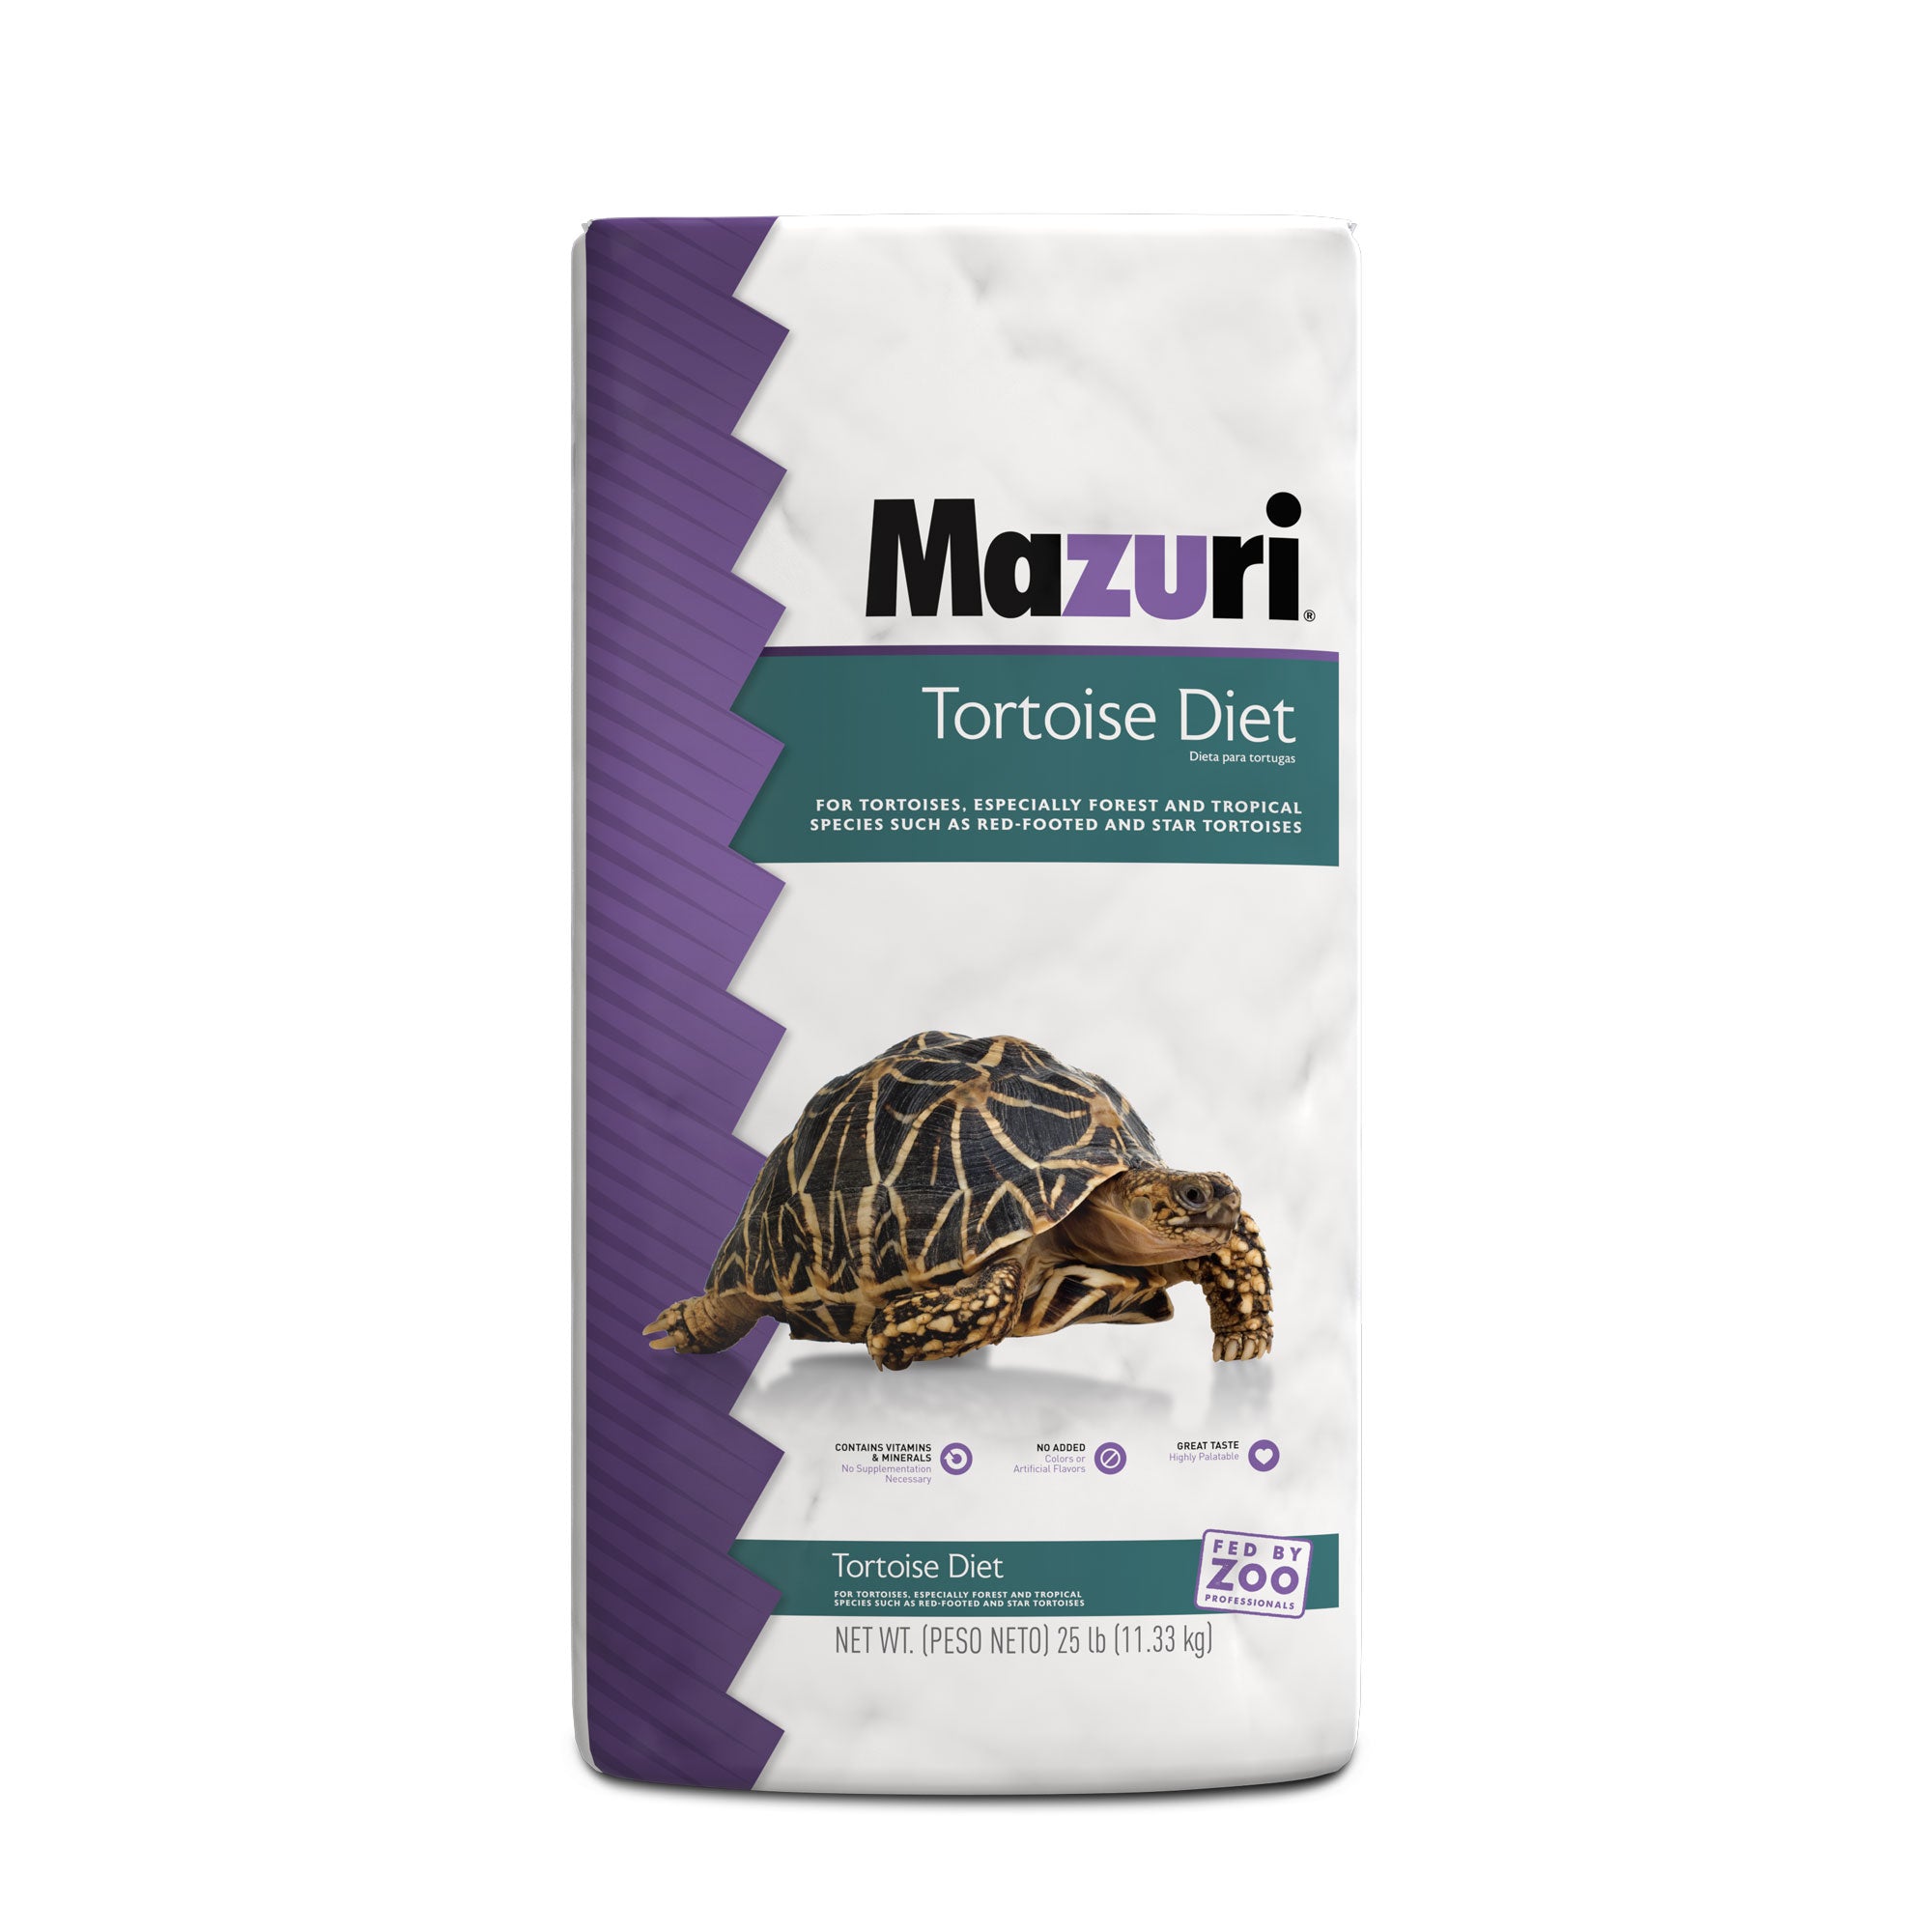 Mazuri Tortoise Diet large bag with tortoise image